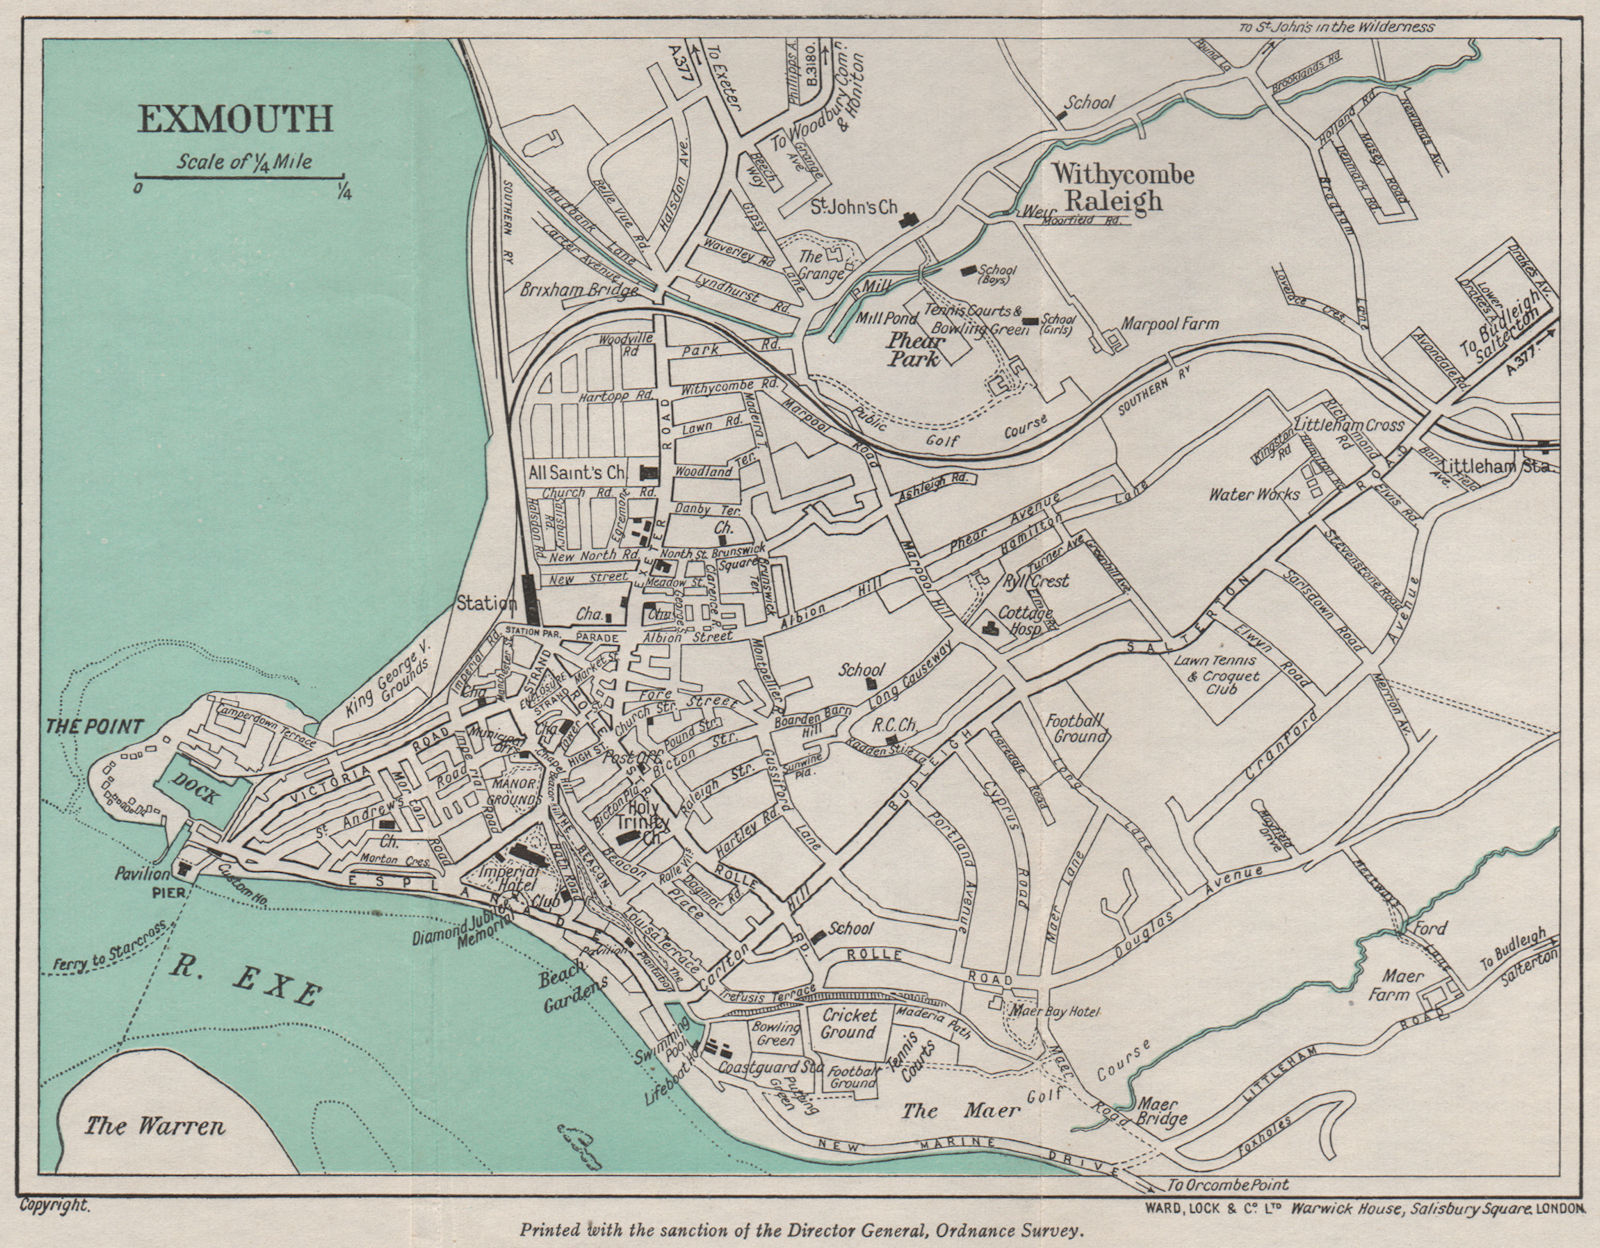 Associate Product EXMOUTH vintage town/city plan. Devon. WARD LOCK 1948 old vintage map chart